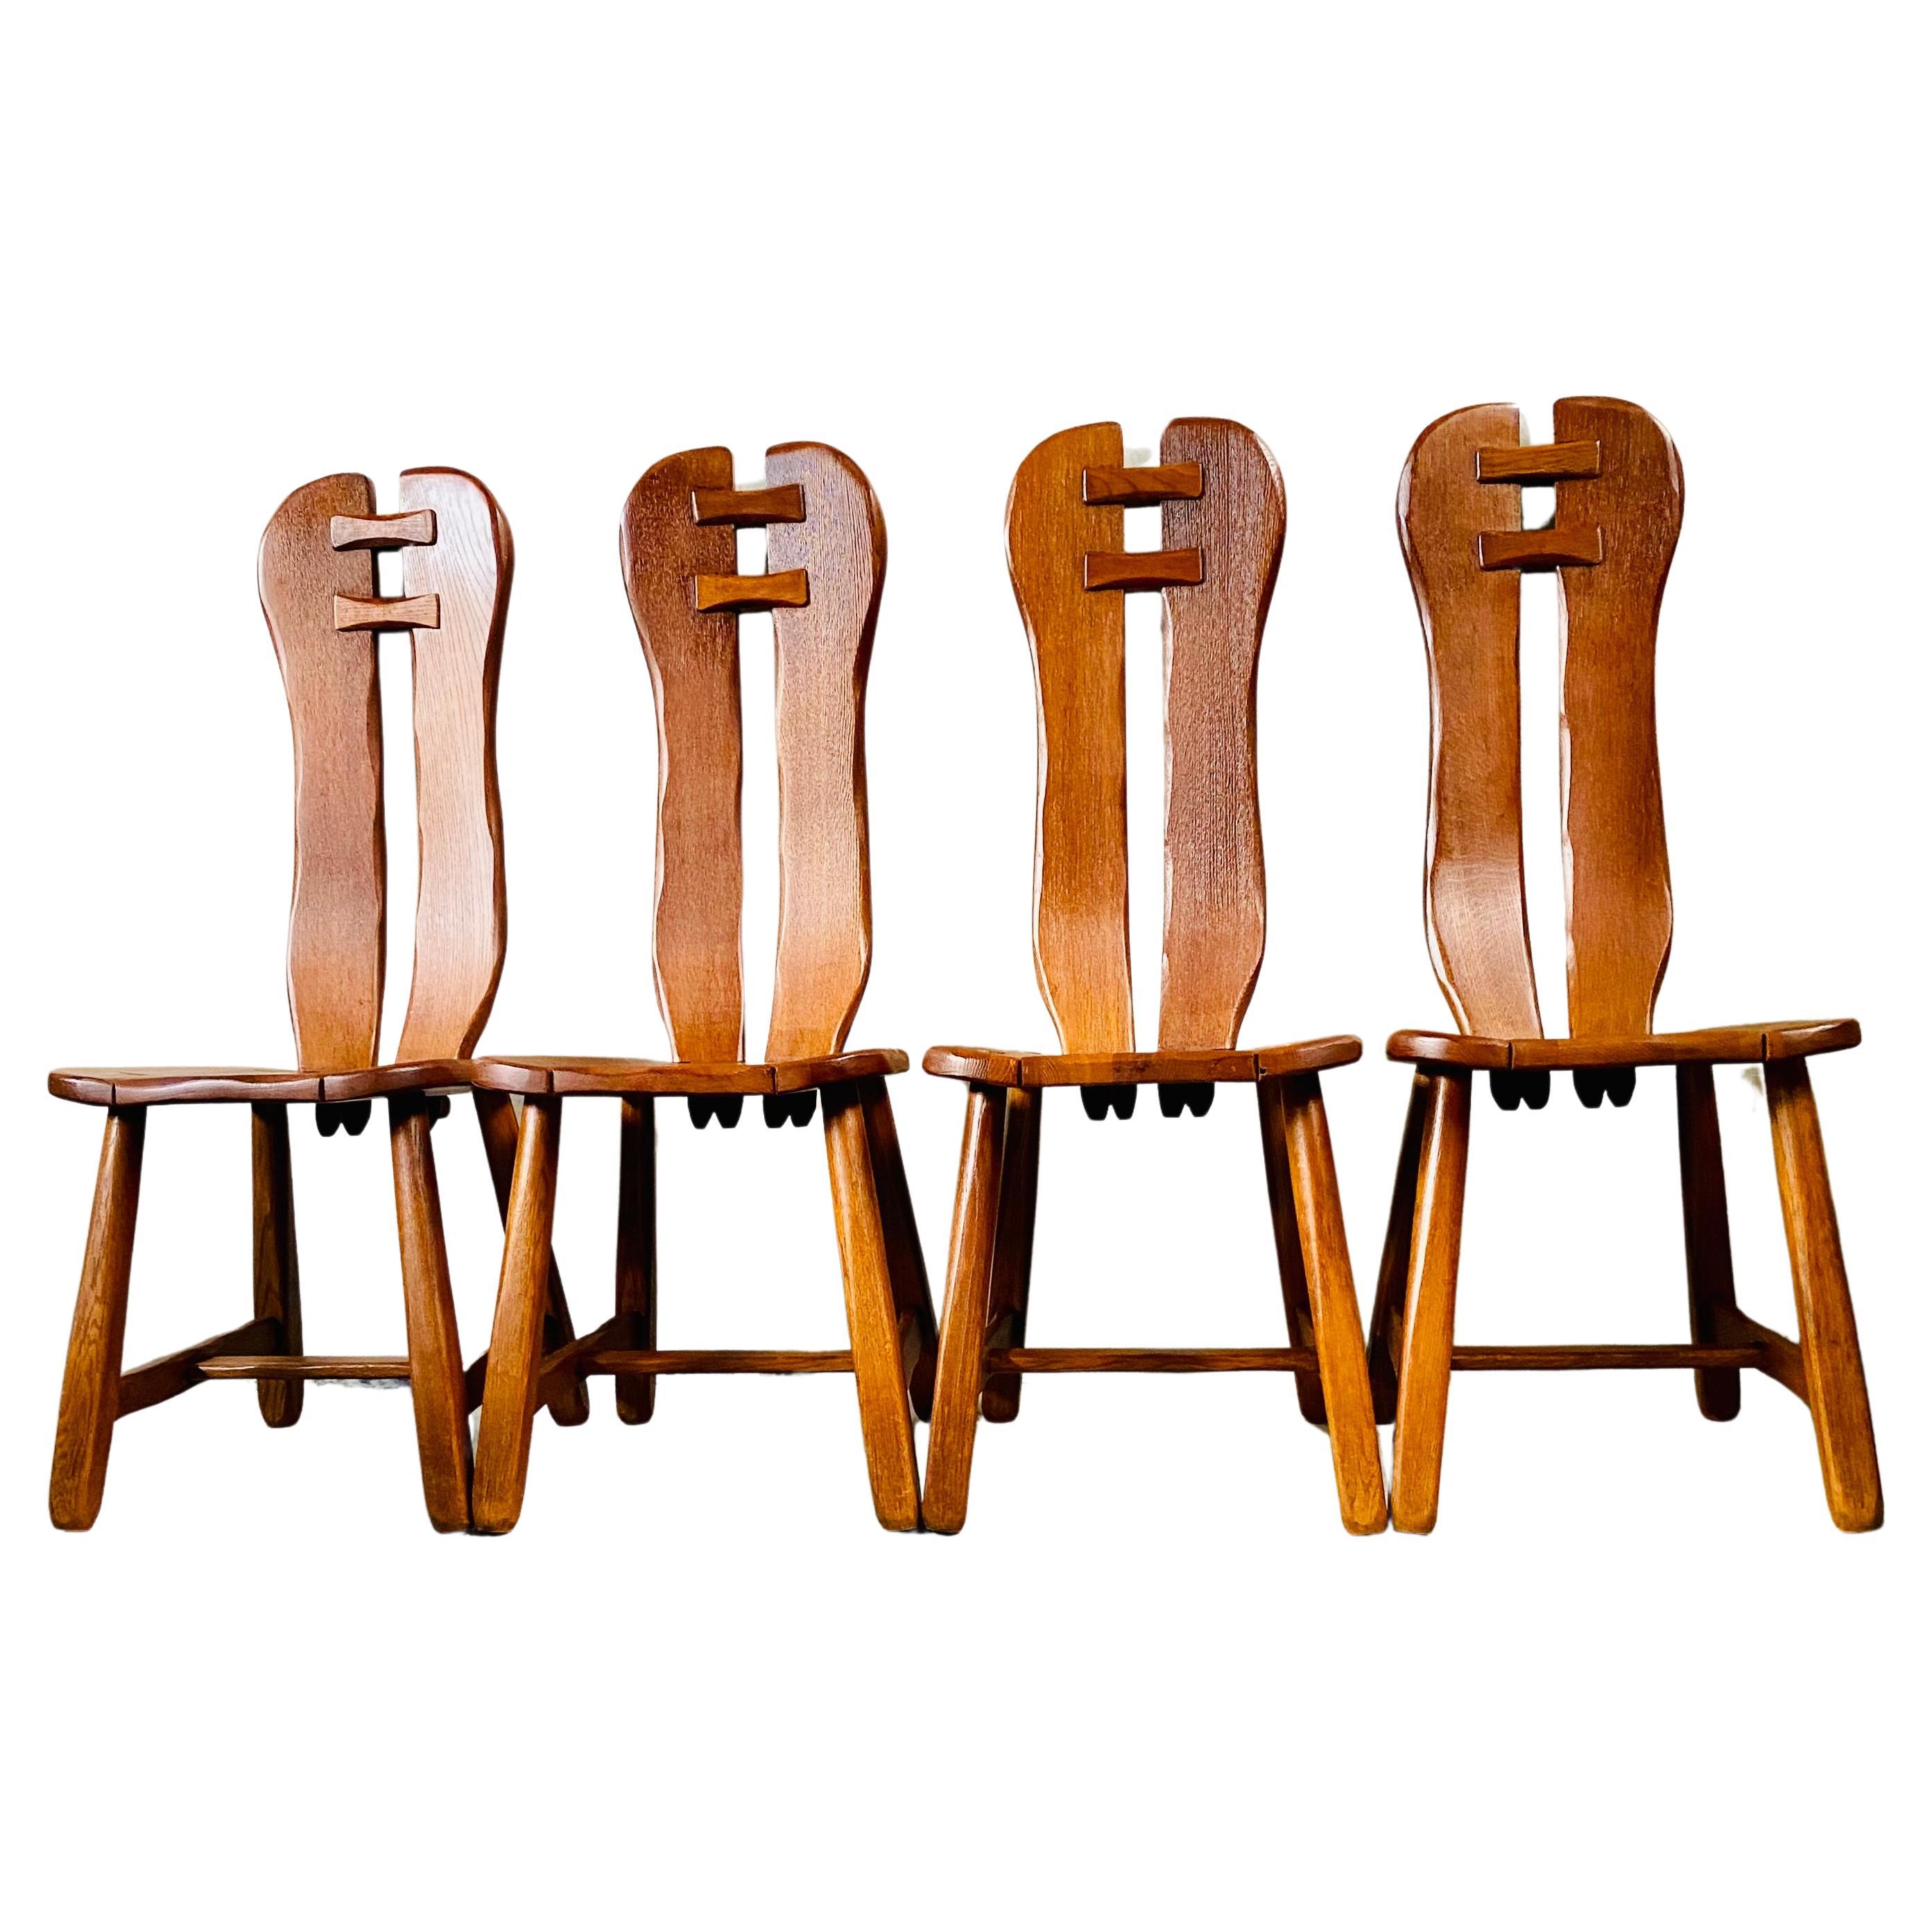 Brutalist Solid Oak Art Dining Chairs by "Kunstmeubelen De Puydt", Belgium 1970s For Sale